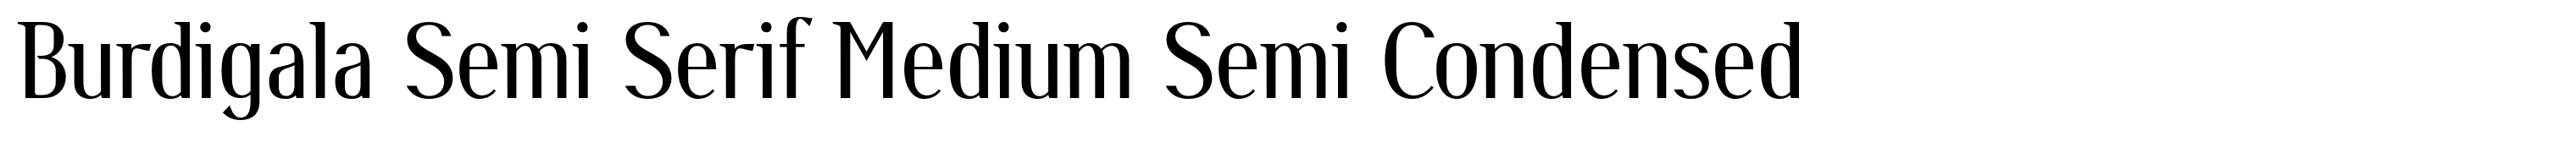 Burdigala Semi Serif Medium Semi Condensed